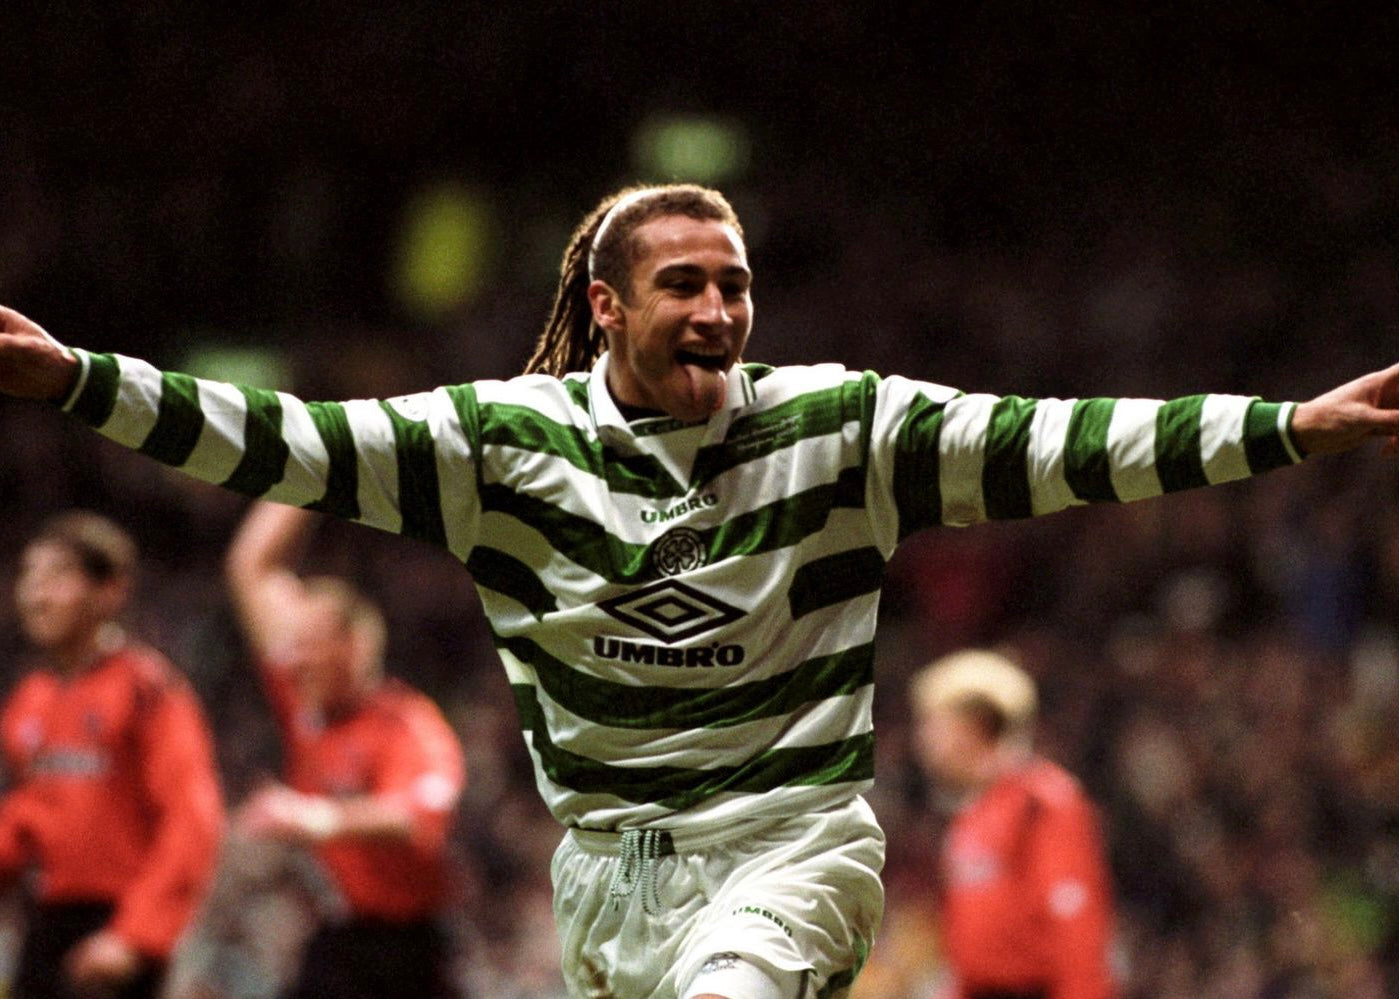 Celtic 1998/99 Home Shirt